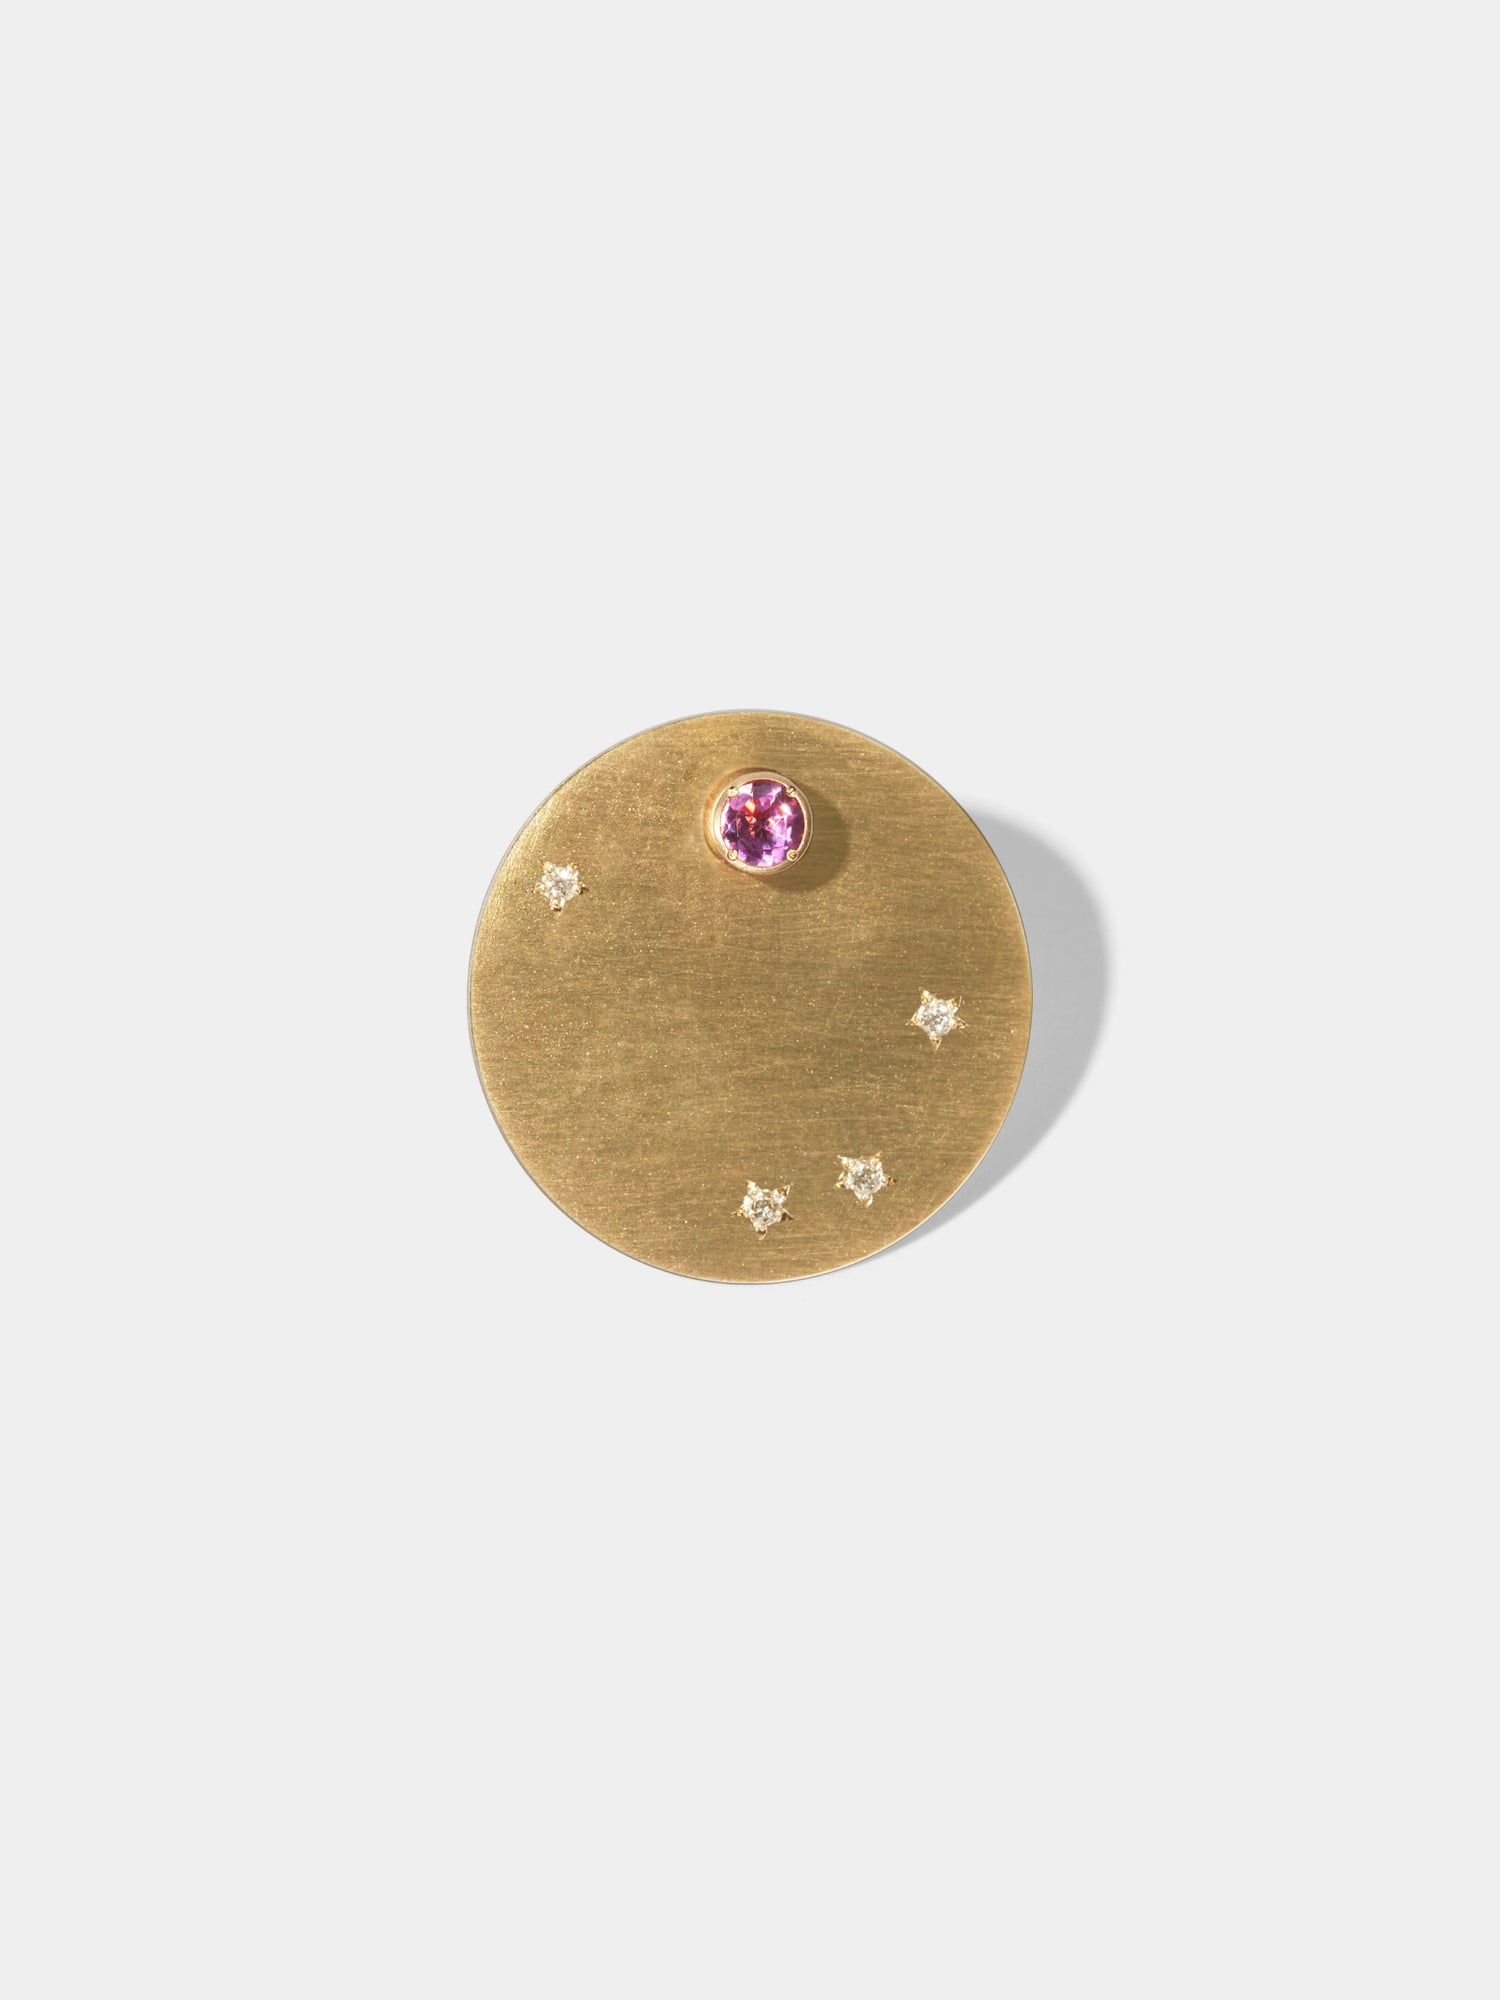 ASTERISM_Pierced Earring_Aries(牡羊座) / Pink Tourmaline